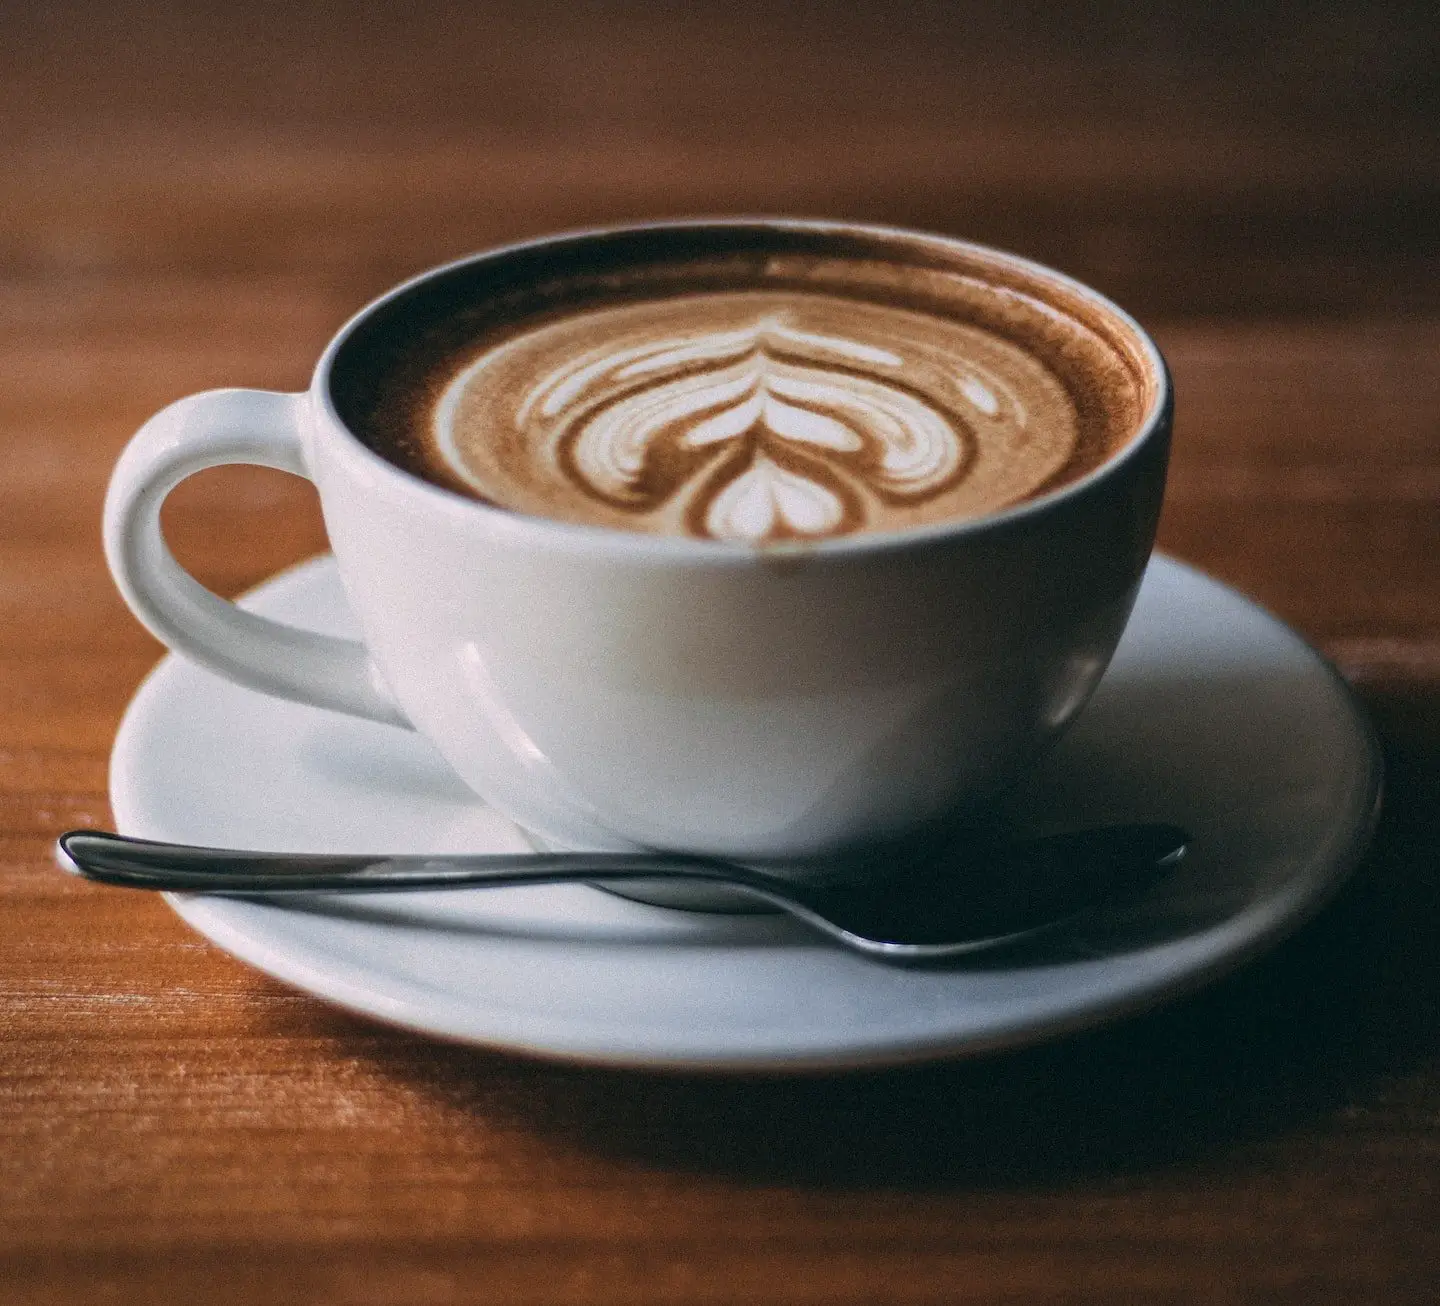 Nitro Cold Brew Coffee: What is Nitro Coffee?